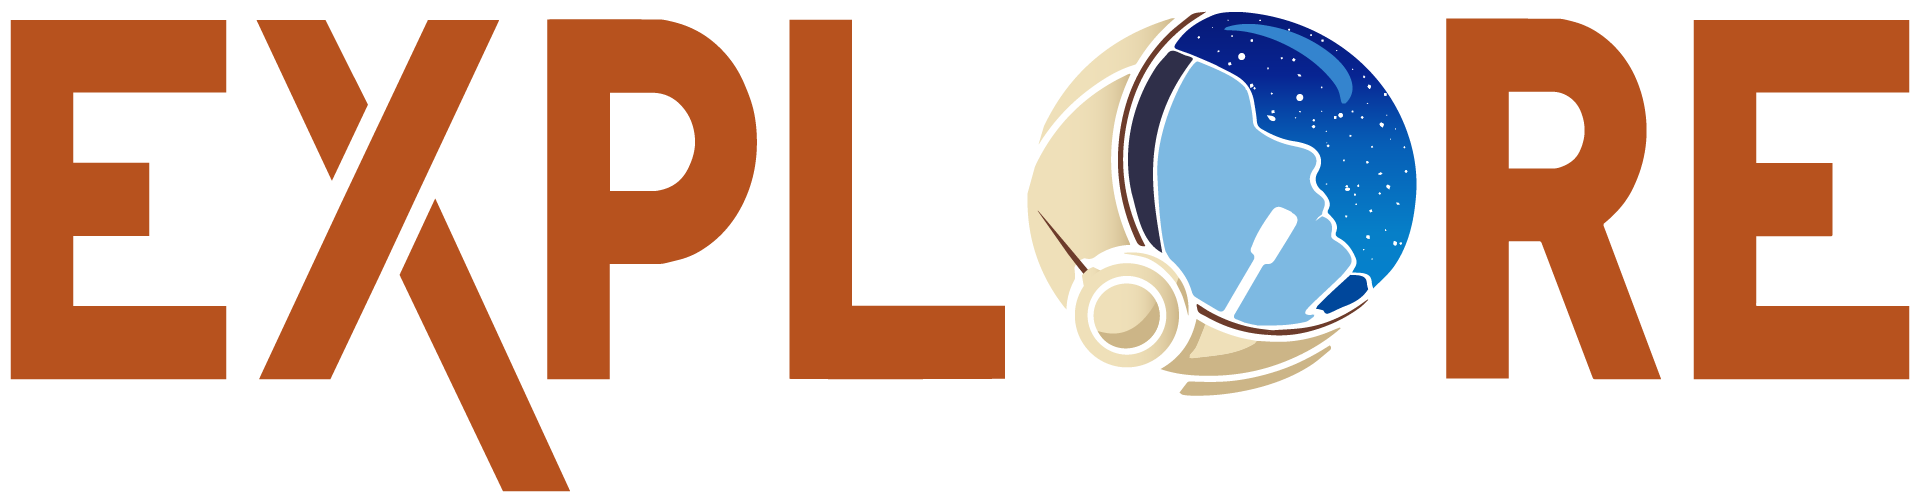 EXPLORE - logo